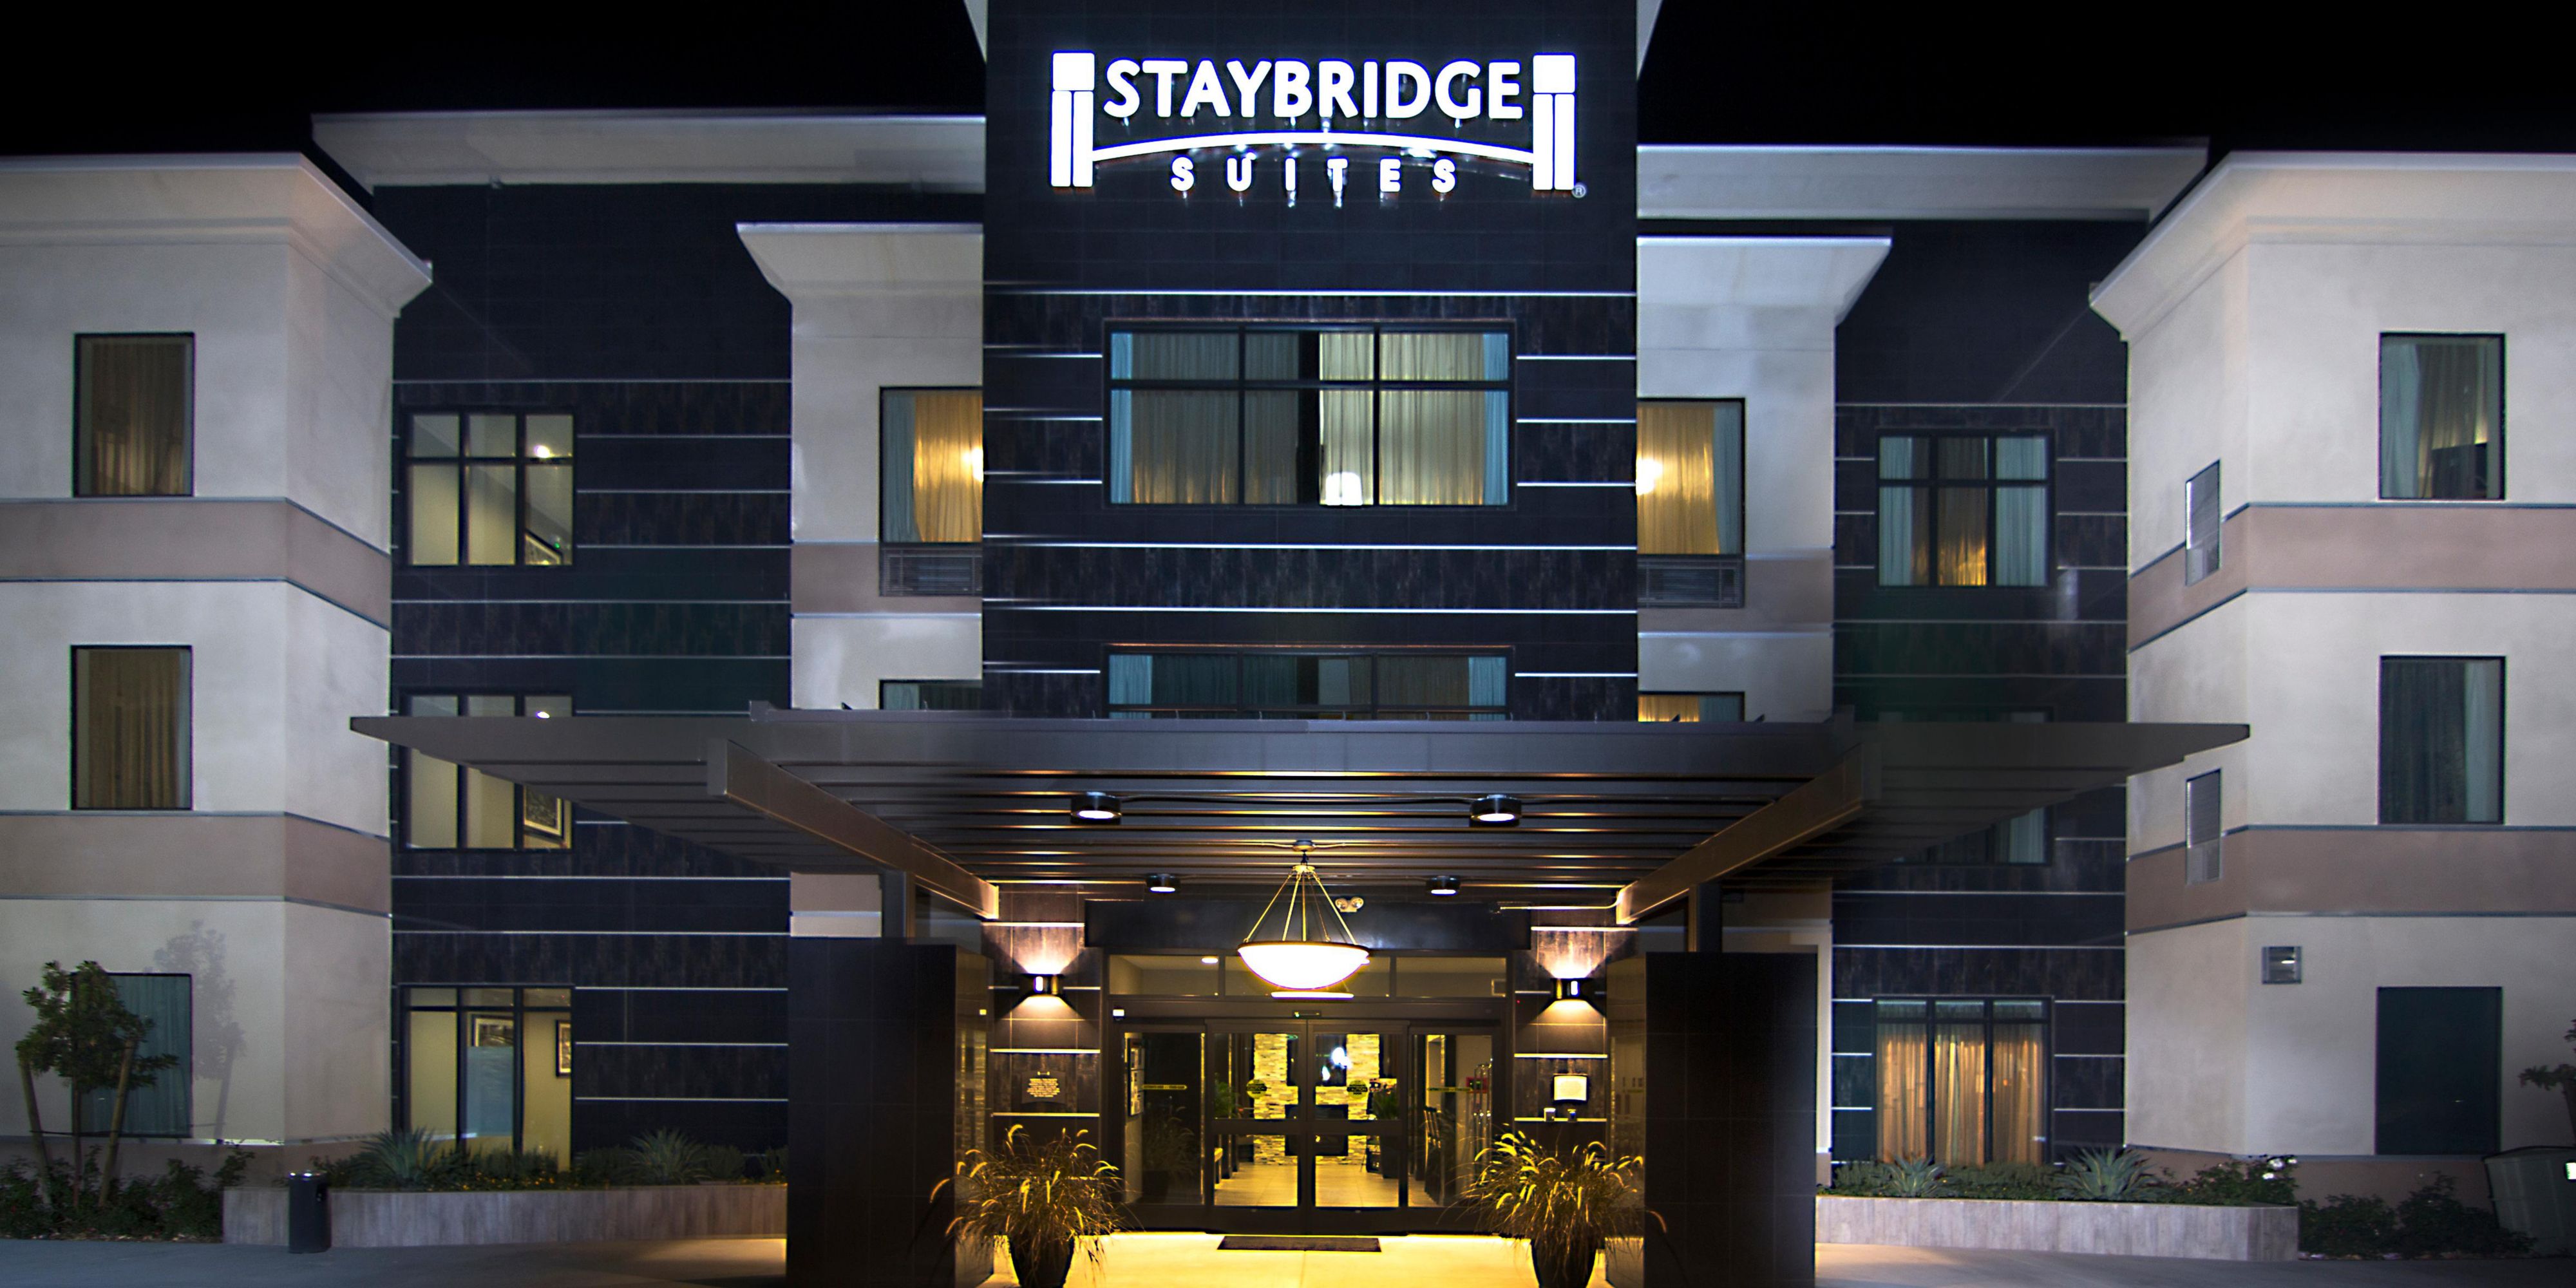 Staybridge Suites Carlsbad 4241897023 2x1